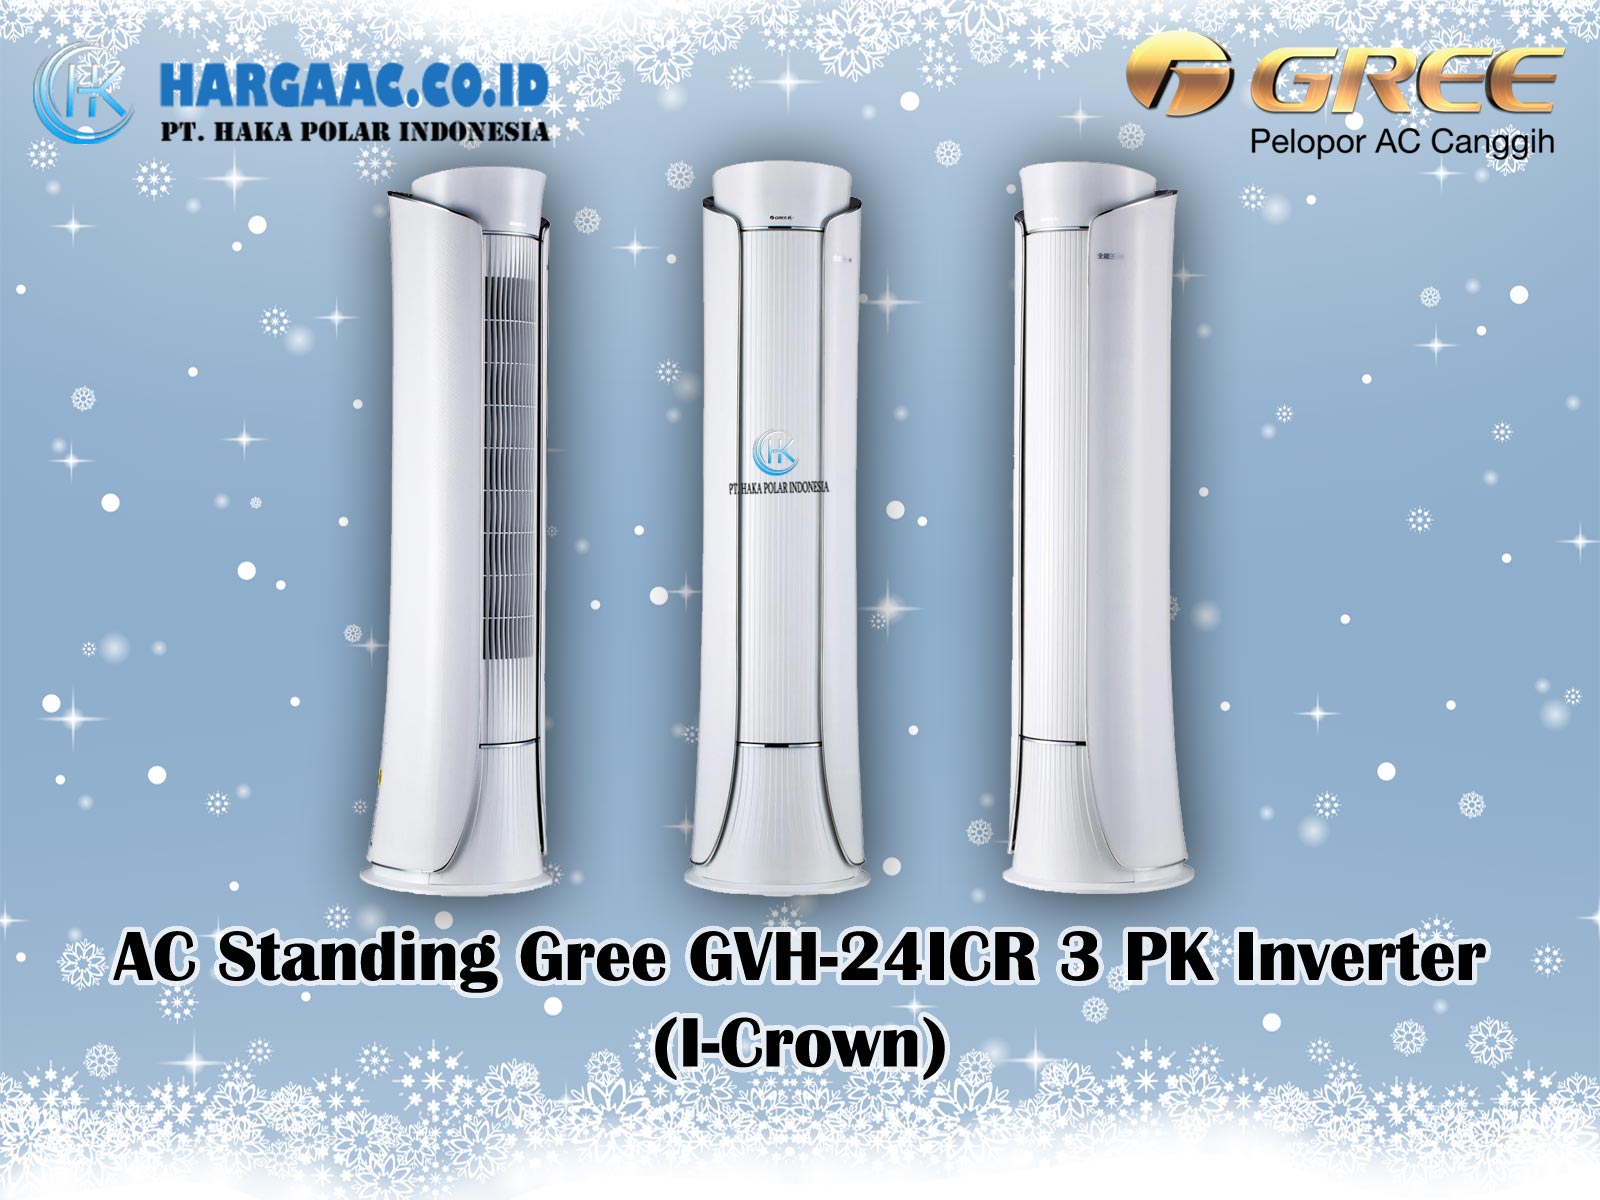 Harga Jual AC Standing Gree GVH-24ICR 3 PK Inverter (I-Crown) 